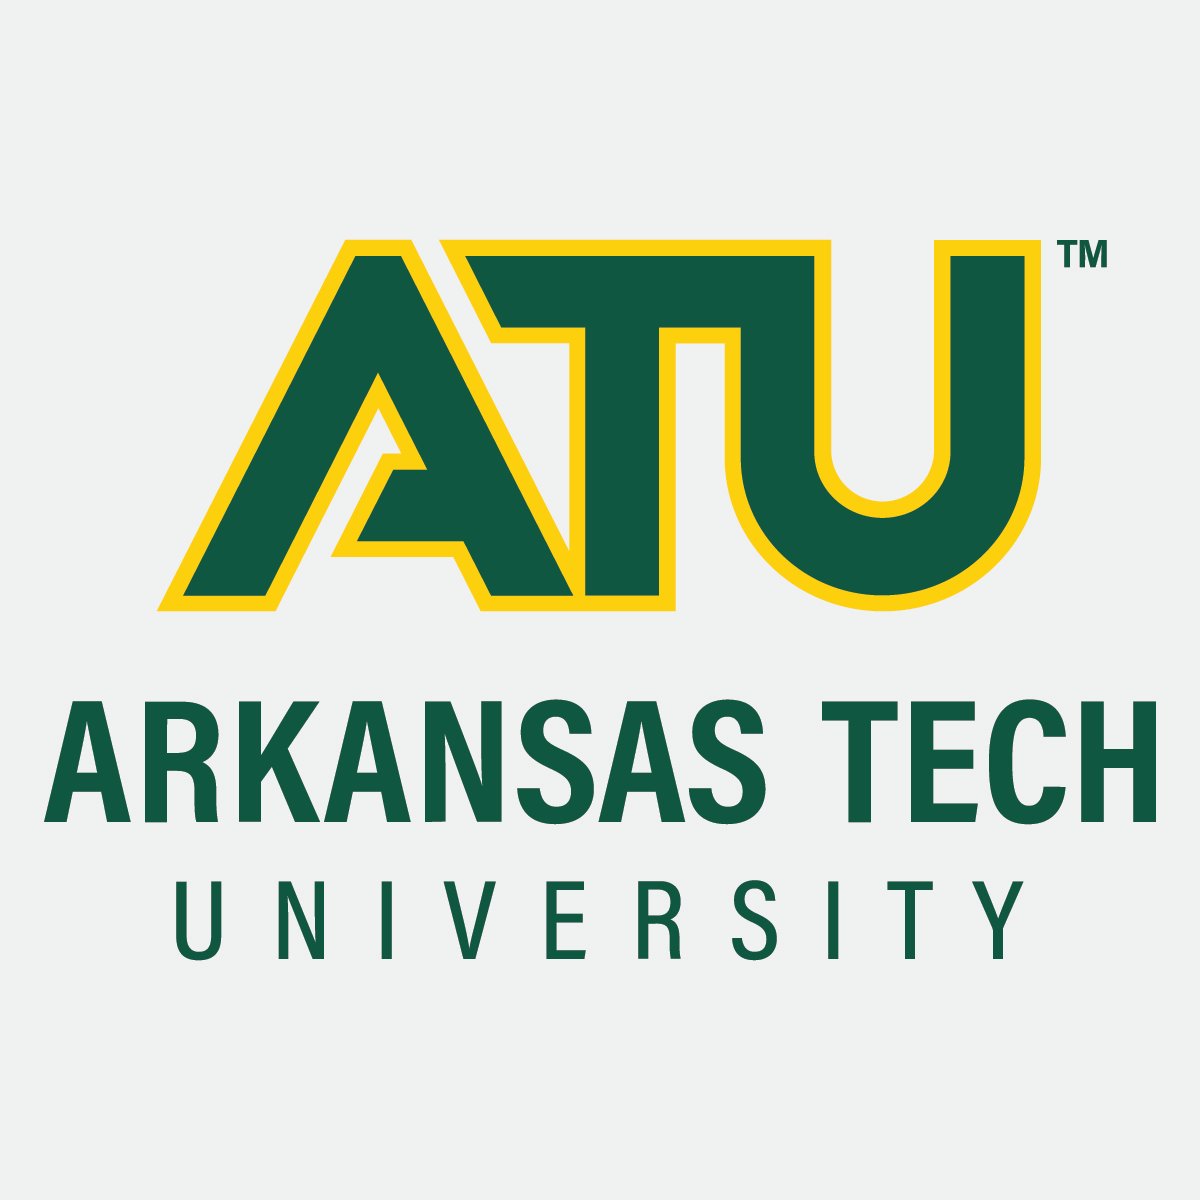 Arkansas tech university